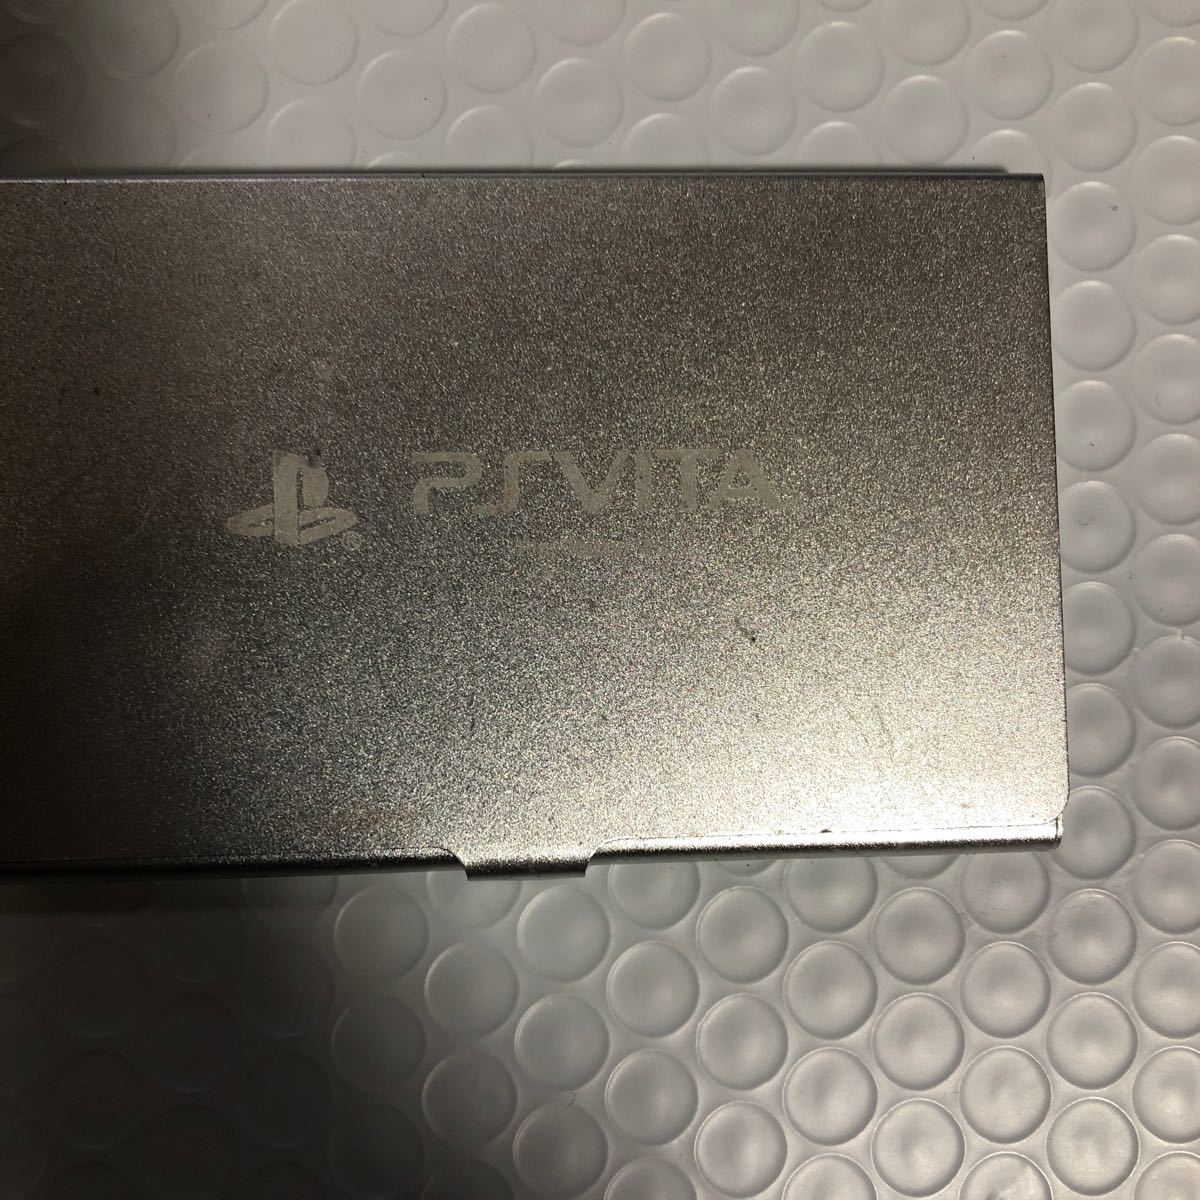 PS Vita 8GBメモリー 2ケ、名刺サイズホルダー